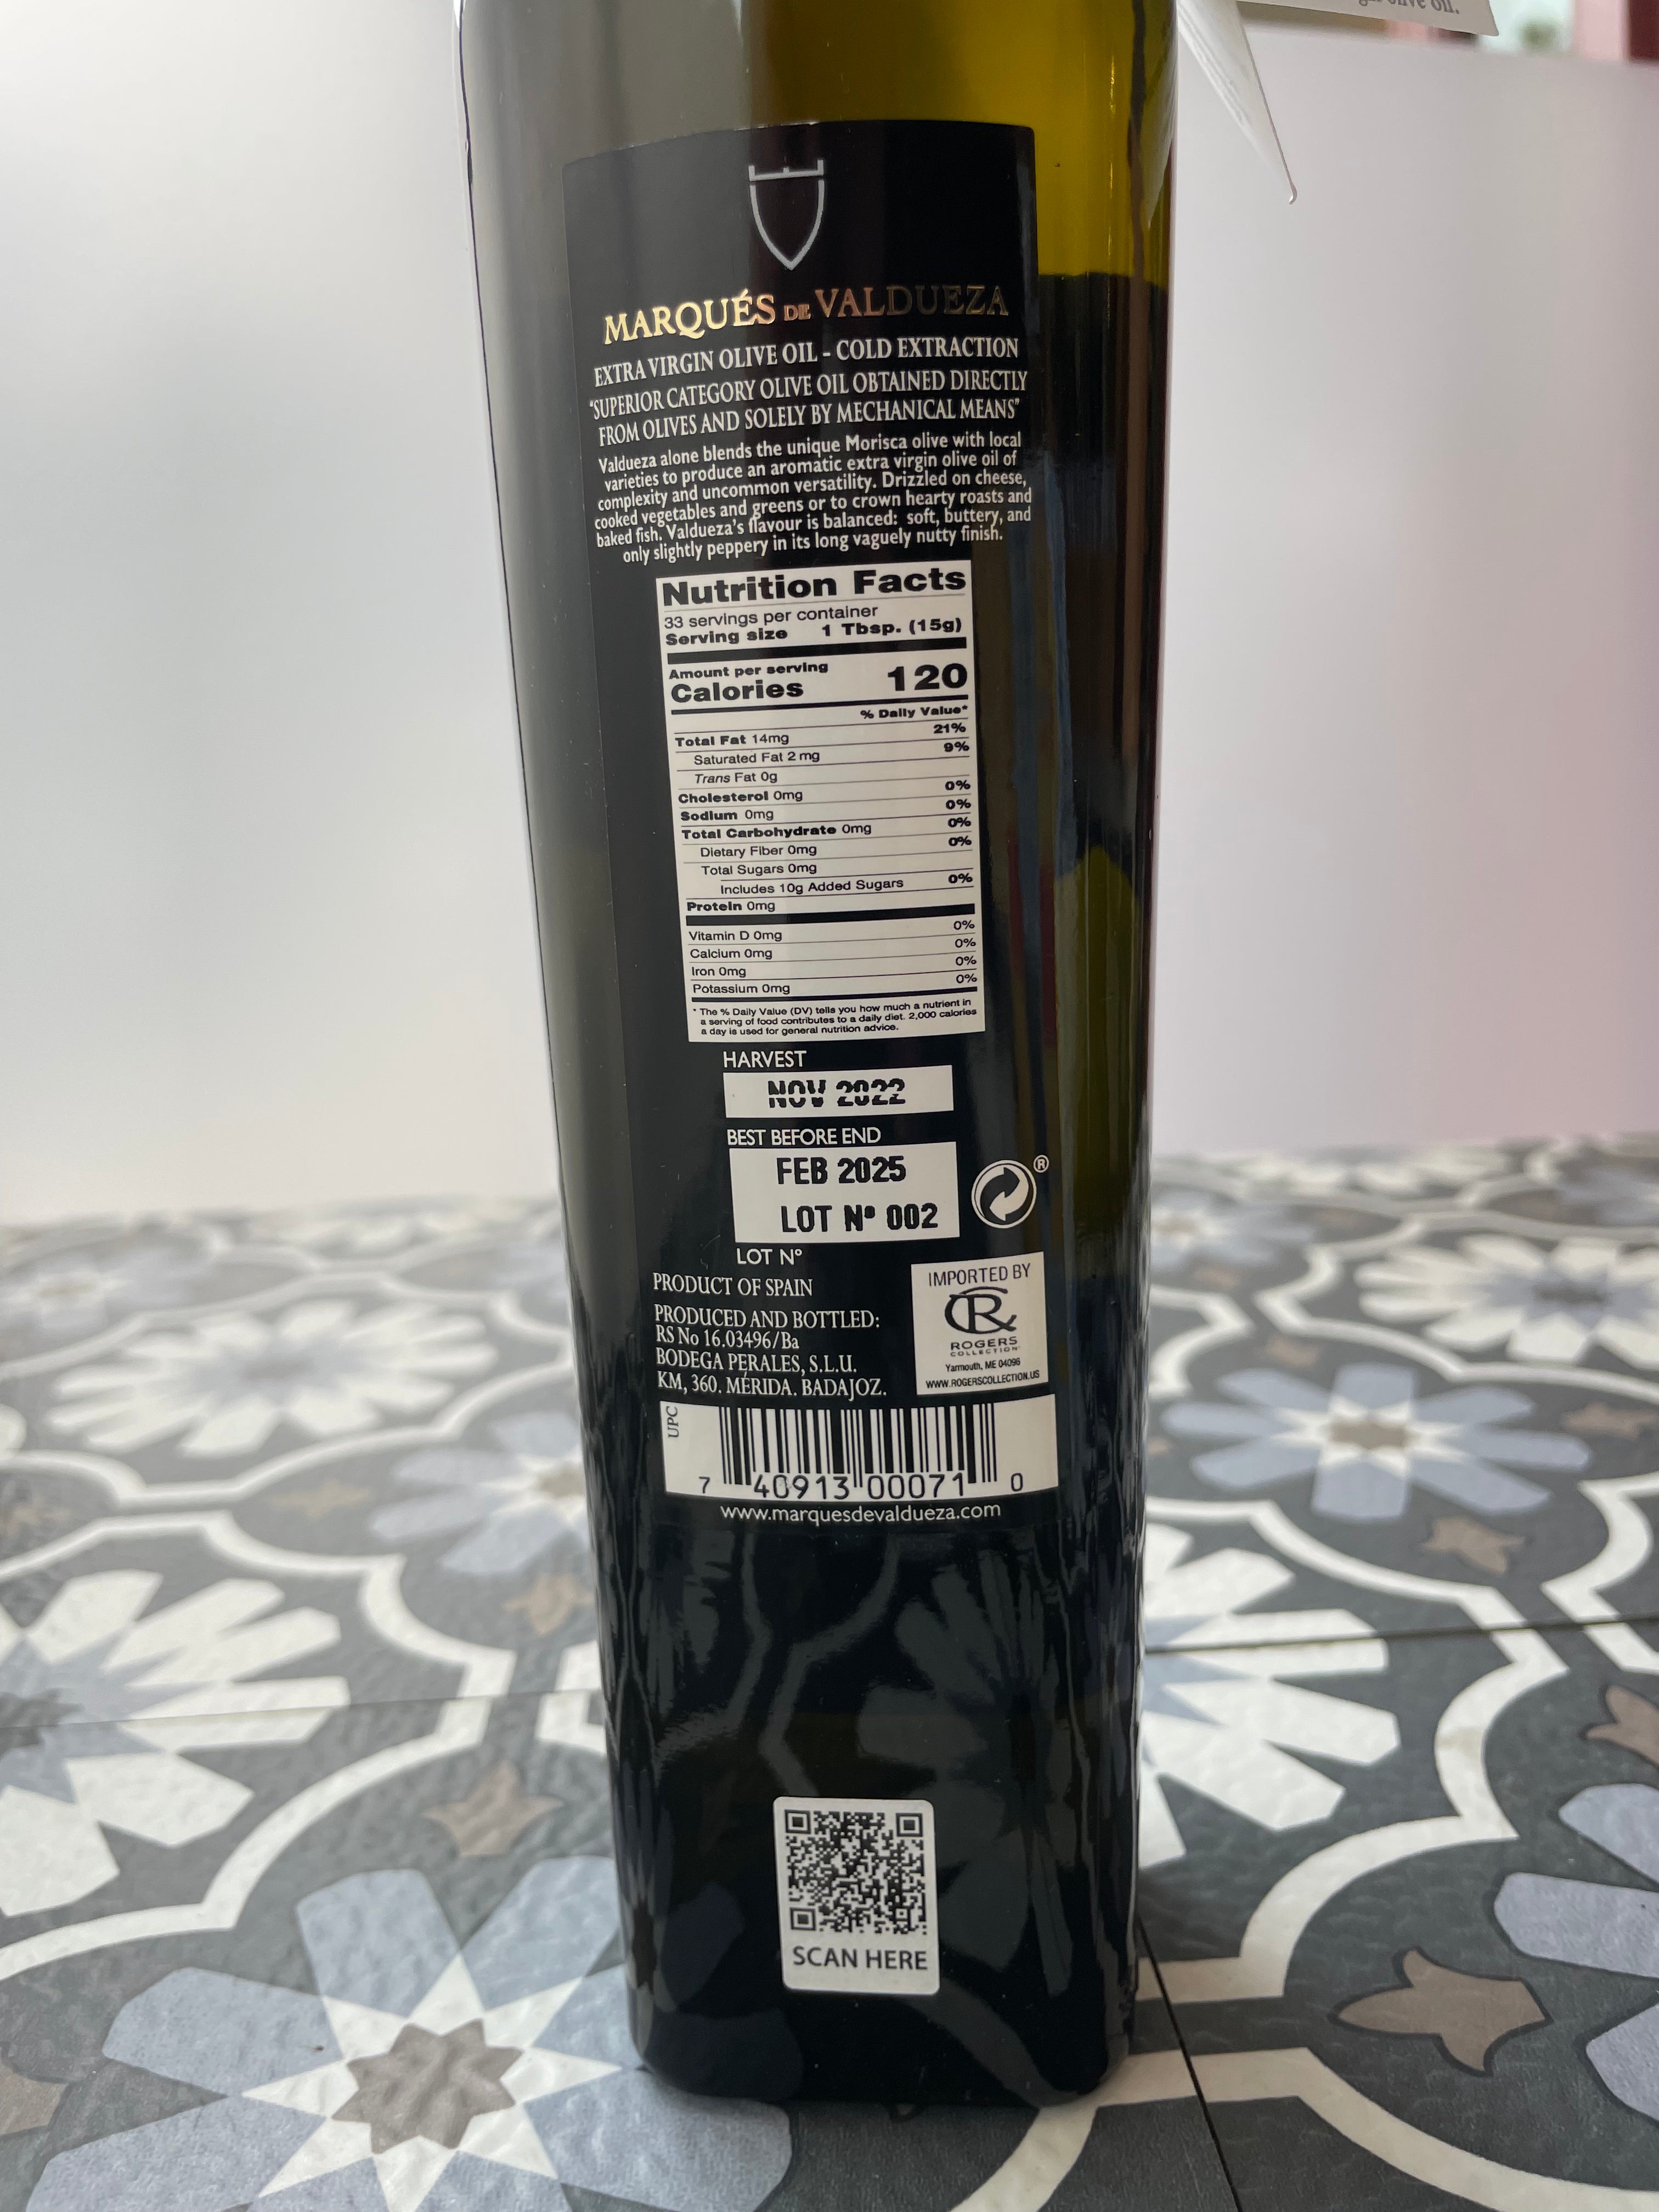 Extra Virgin Olive Oil - Marques de Valduezo